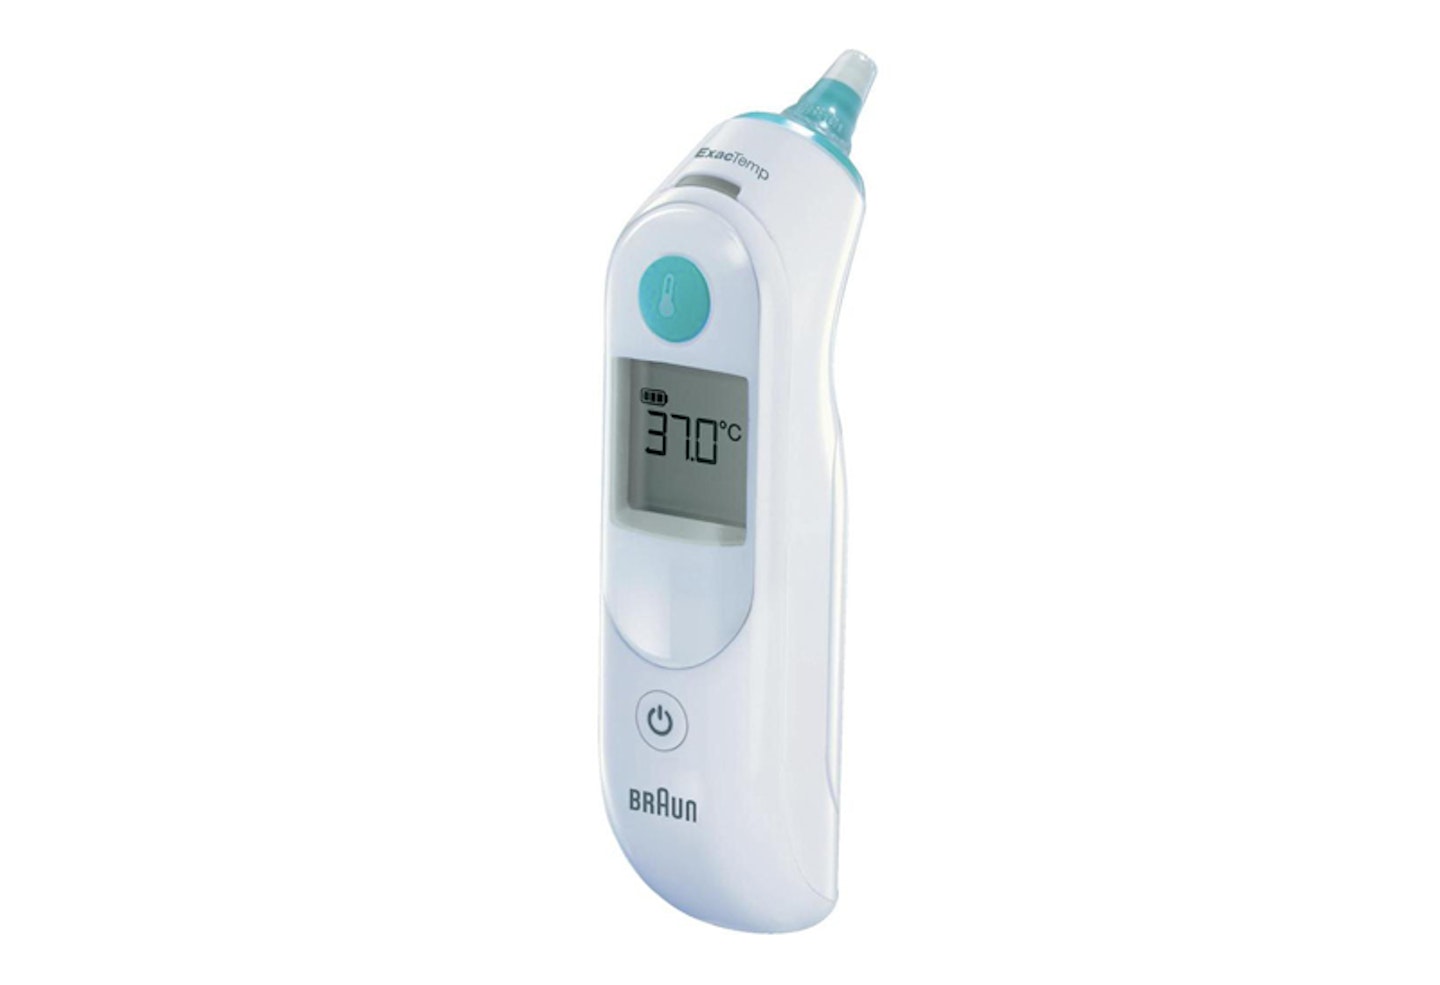 Braun Thermoscan Digital Ear Thermometer, £59.99, Amazon